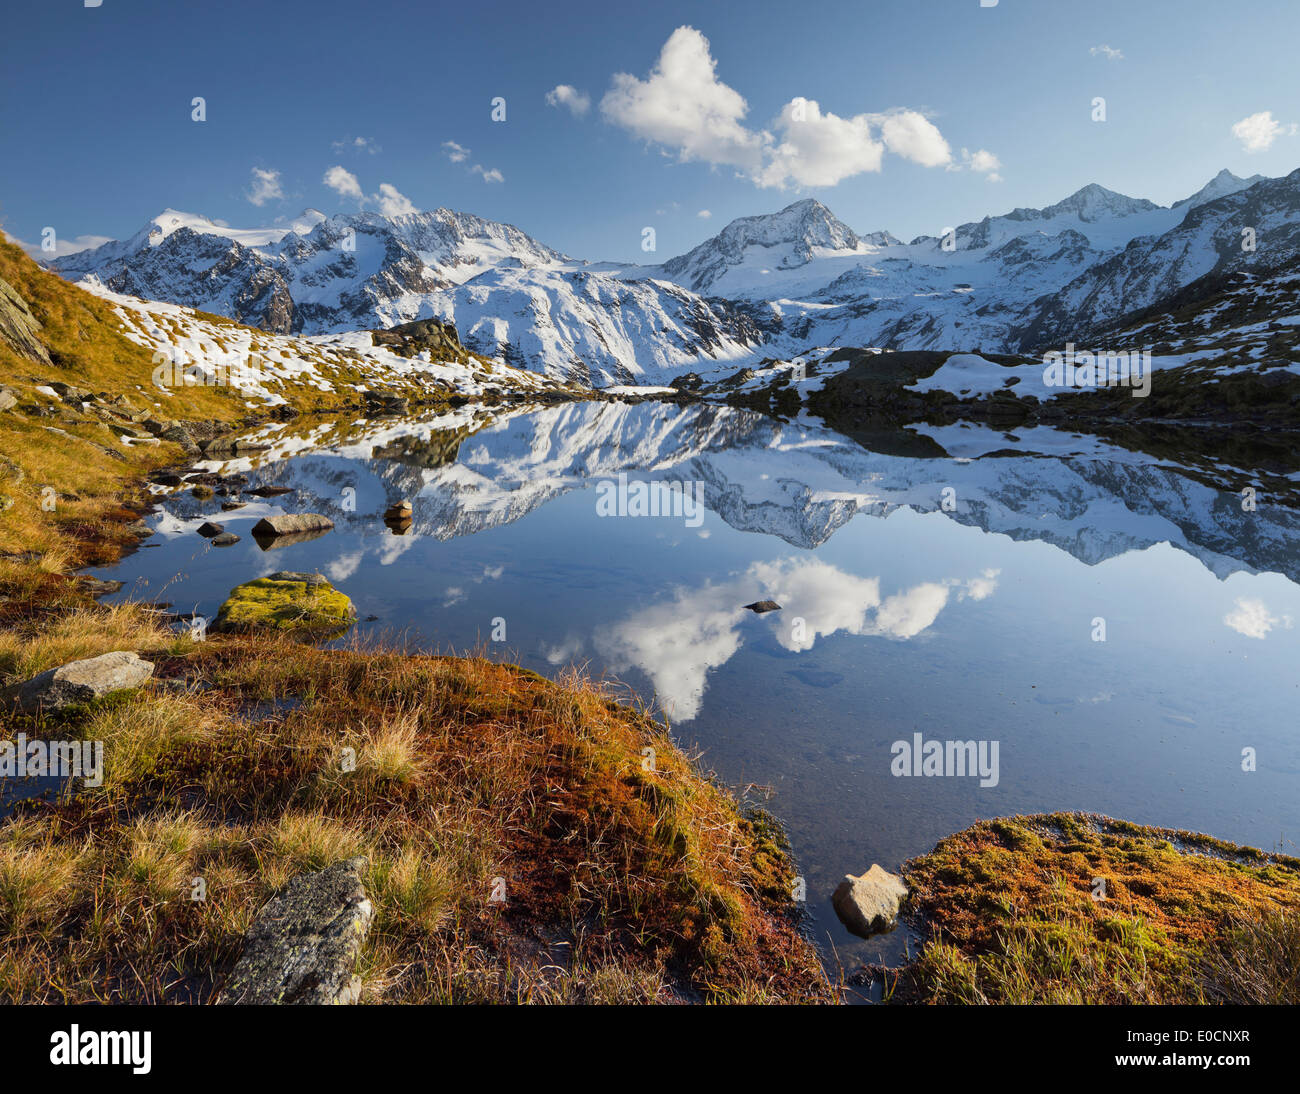 Mountain reflection in a lake, Nameless Lake, Grosser Troegler, Wilder  Pfaff, Zuckerhuetl, Aperer Pfaff, Schaufelspitze, Stubaie Stock Photo -  Alamy